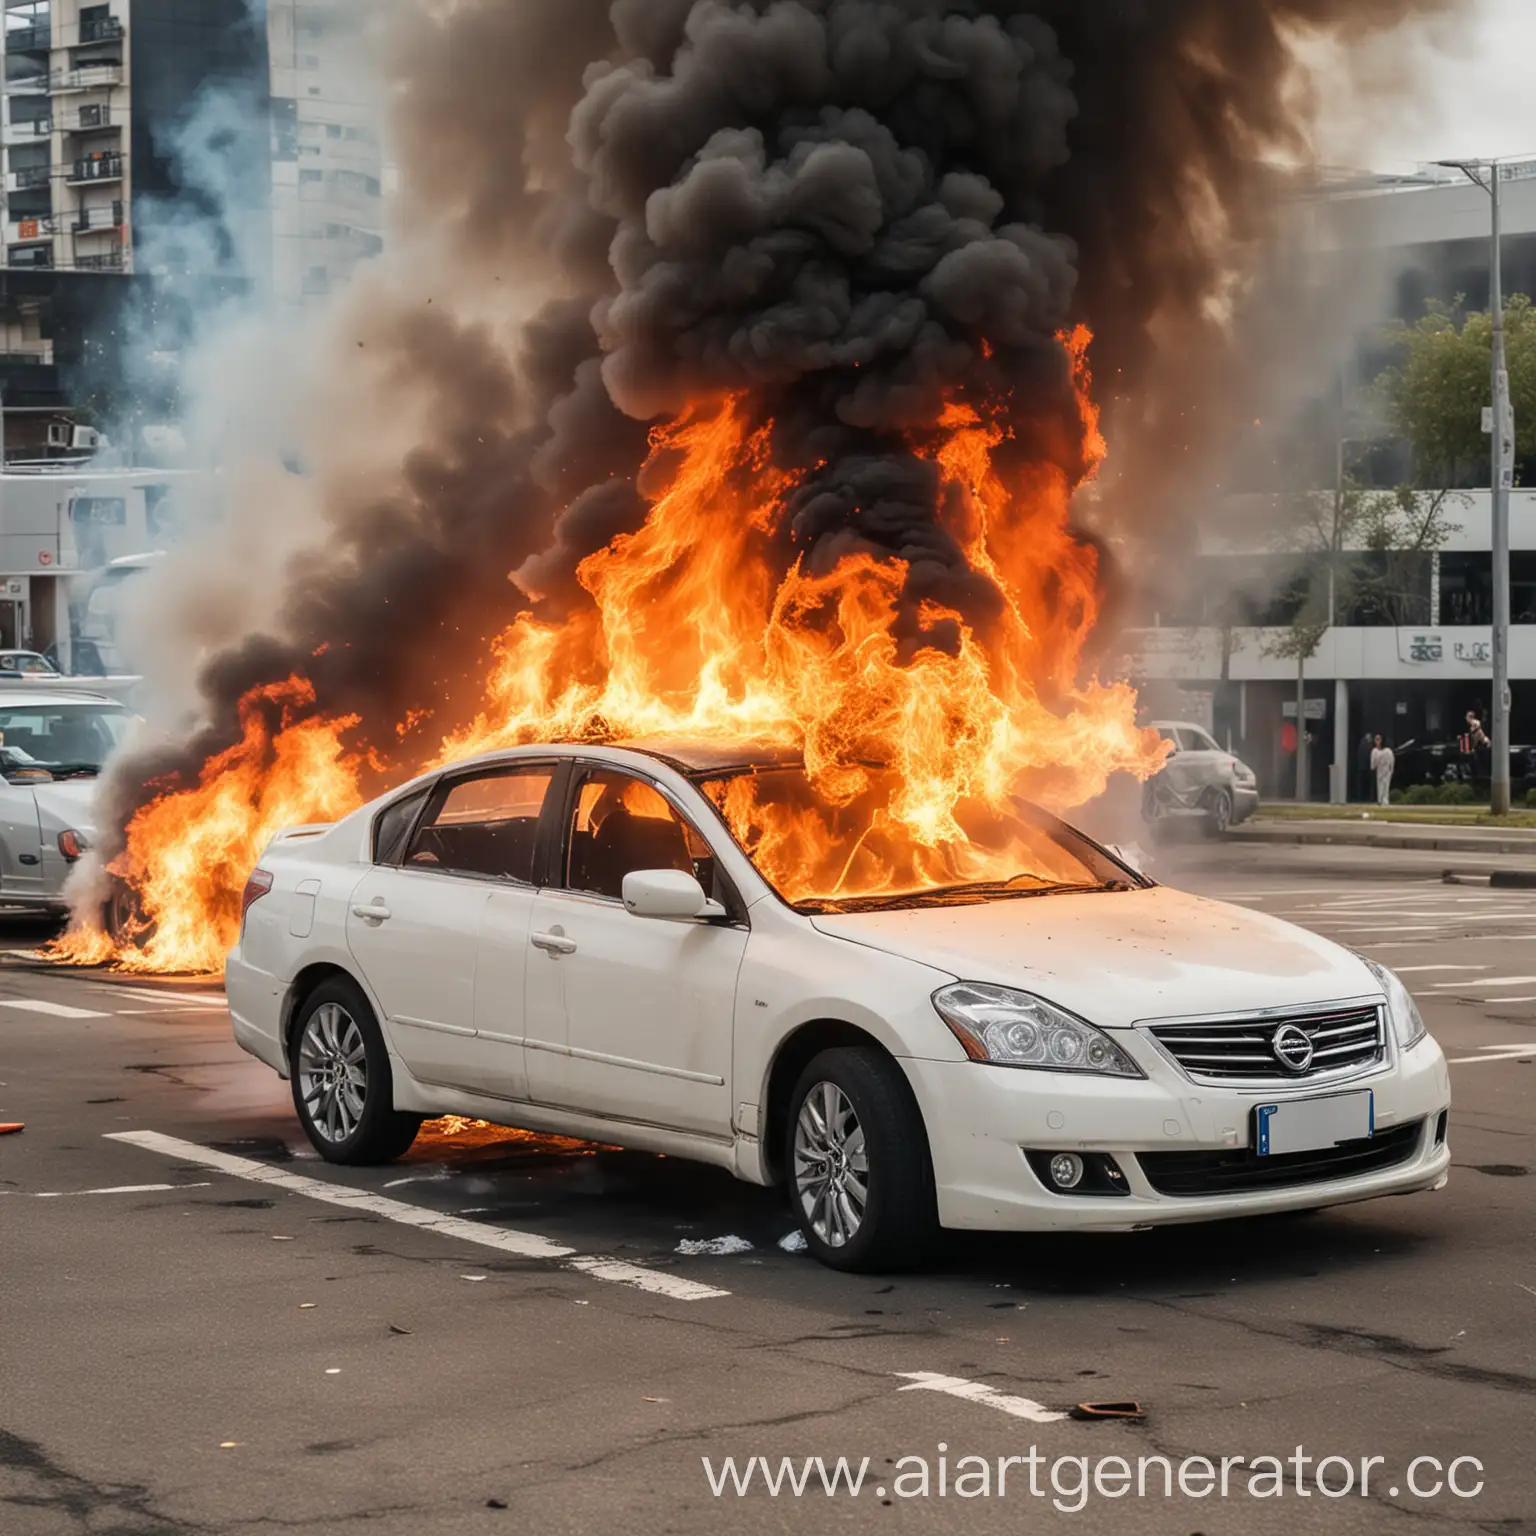 Burning-White-Nissan-Teana-on-Parking-Lot